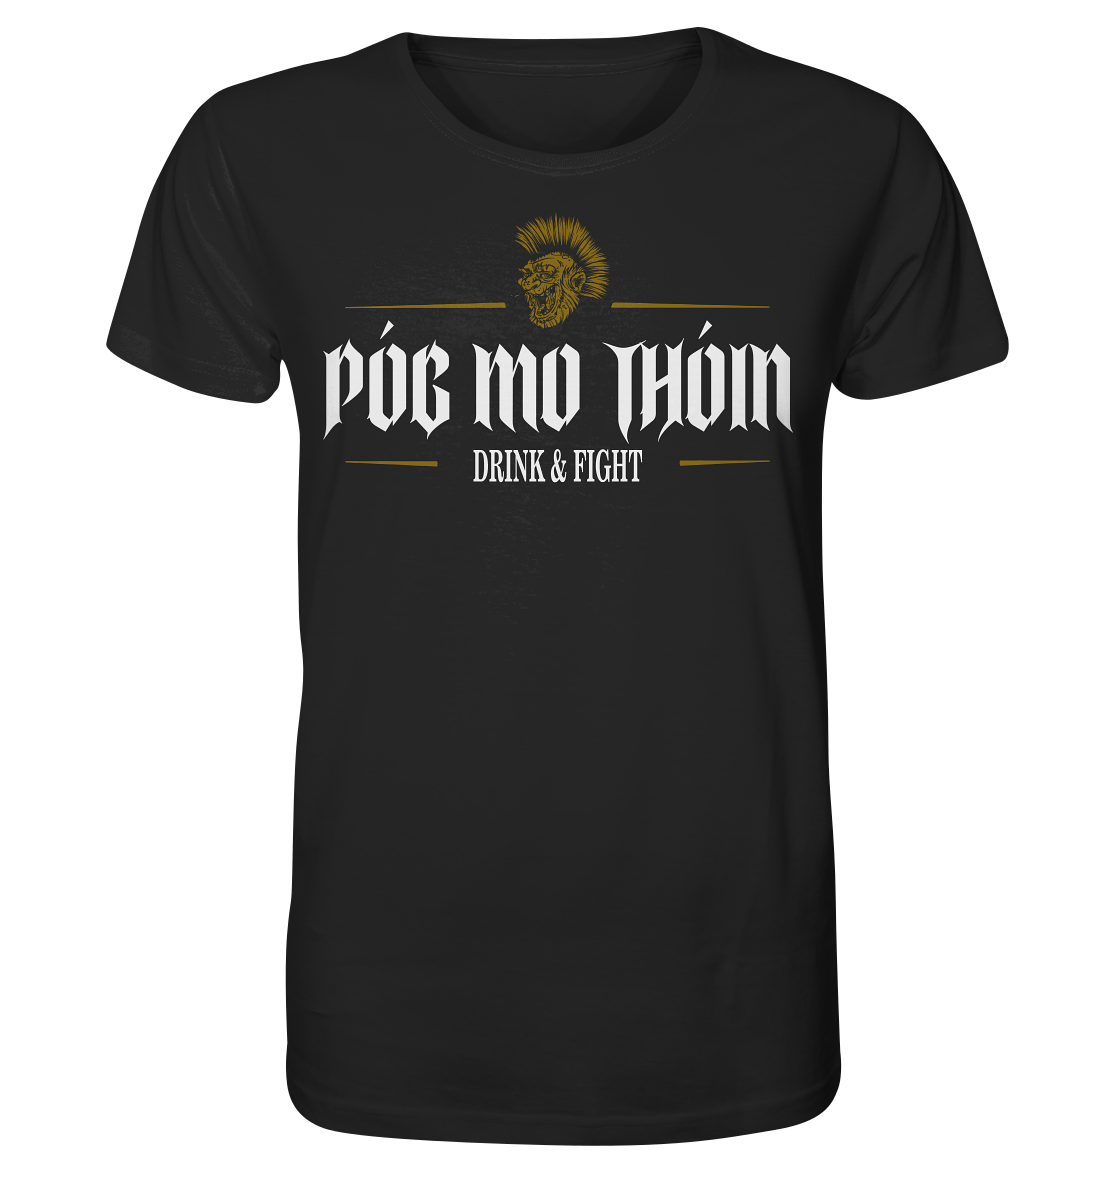 Póg Mo Thóin Streetwear "Drink & Fight" - Organic Shirt